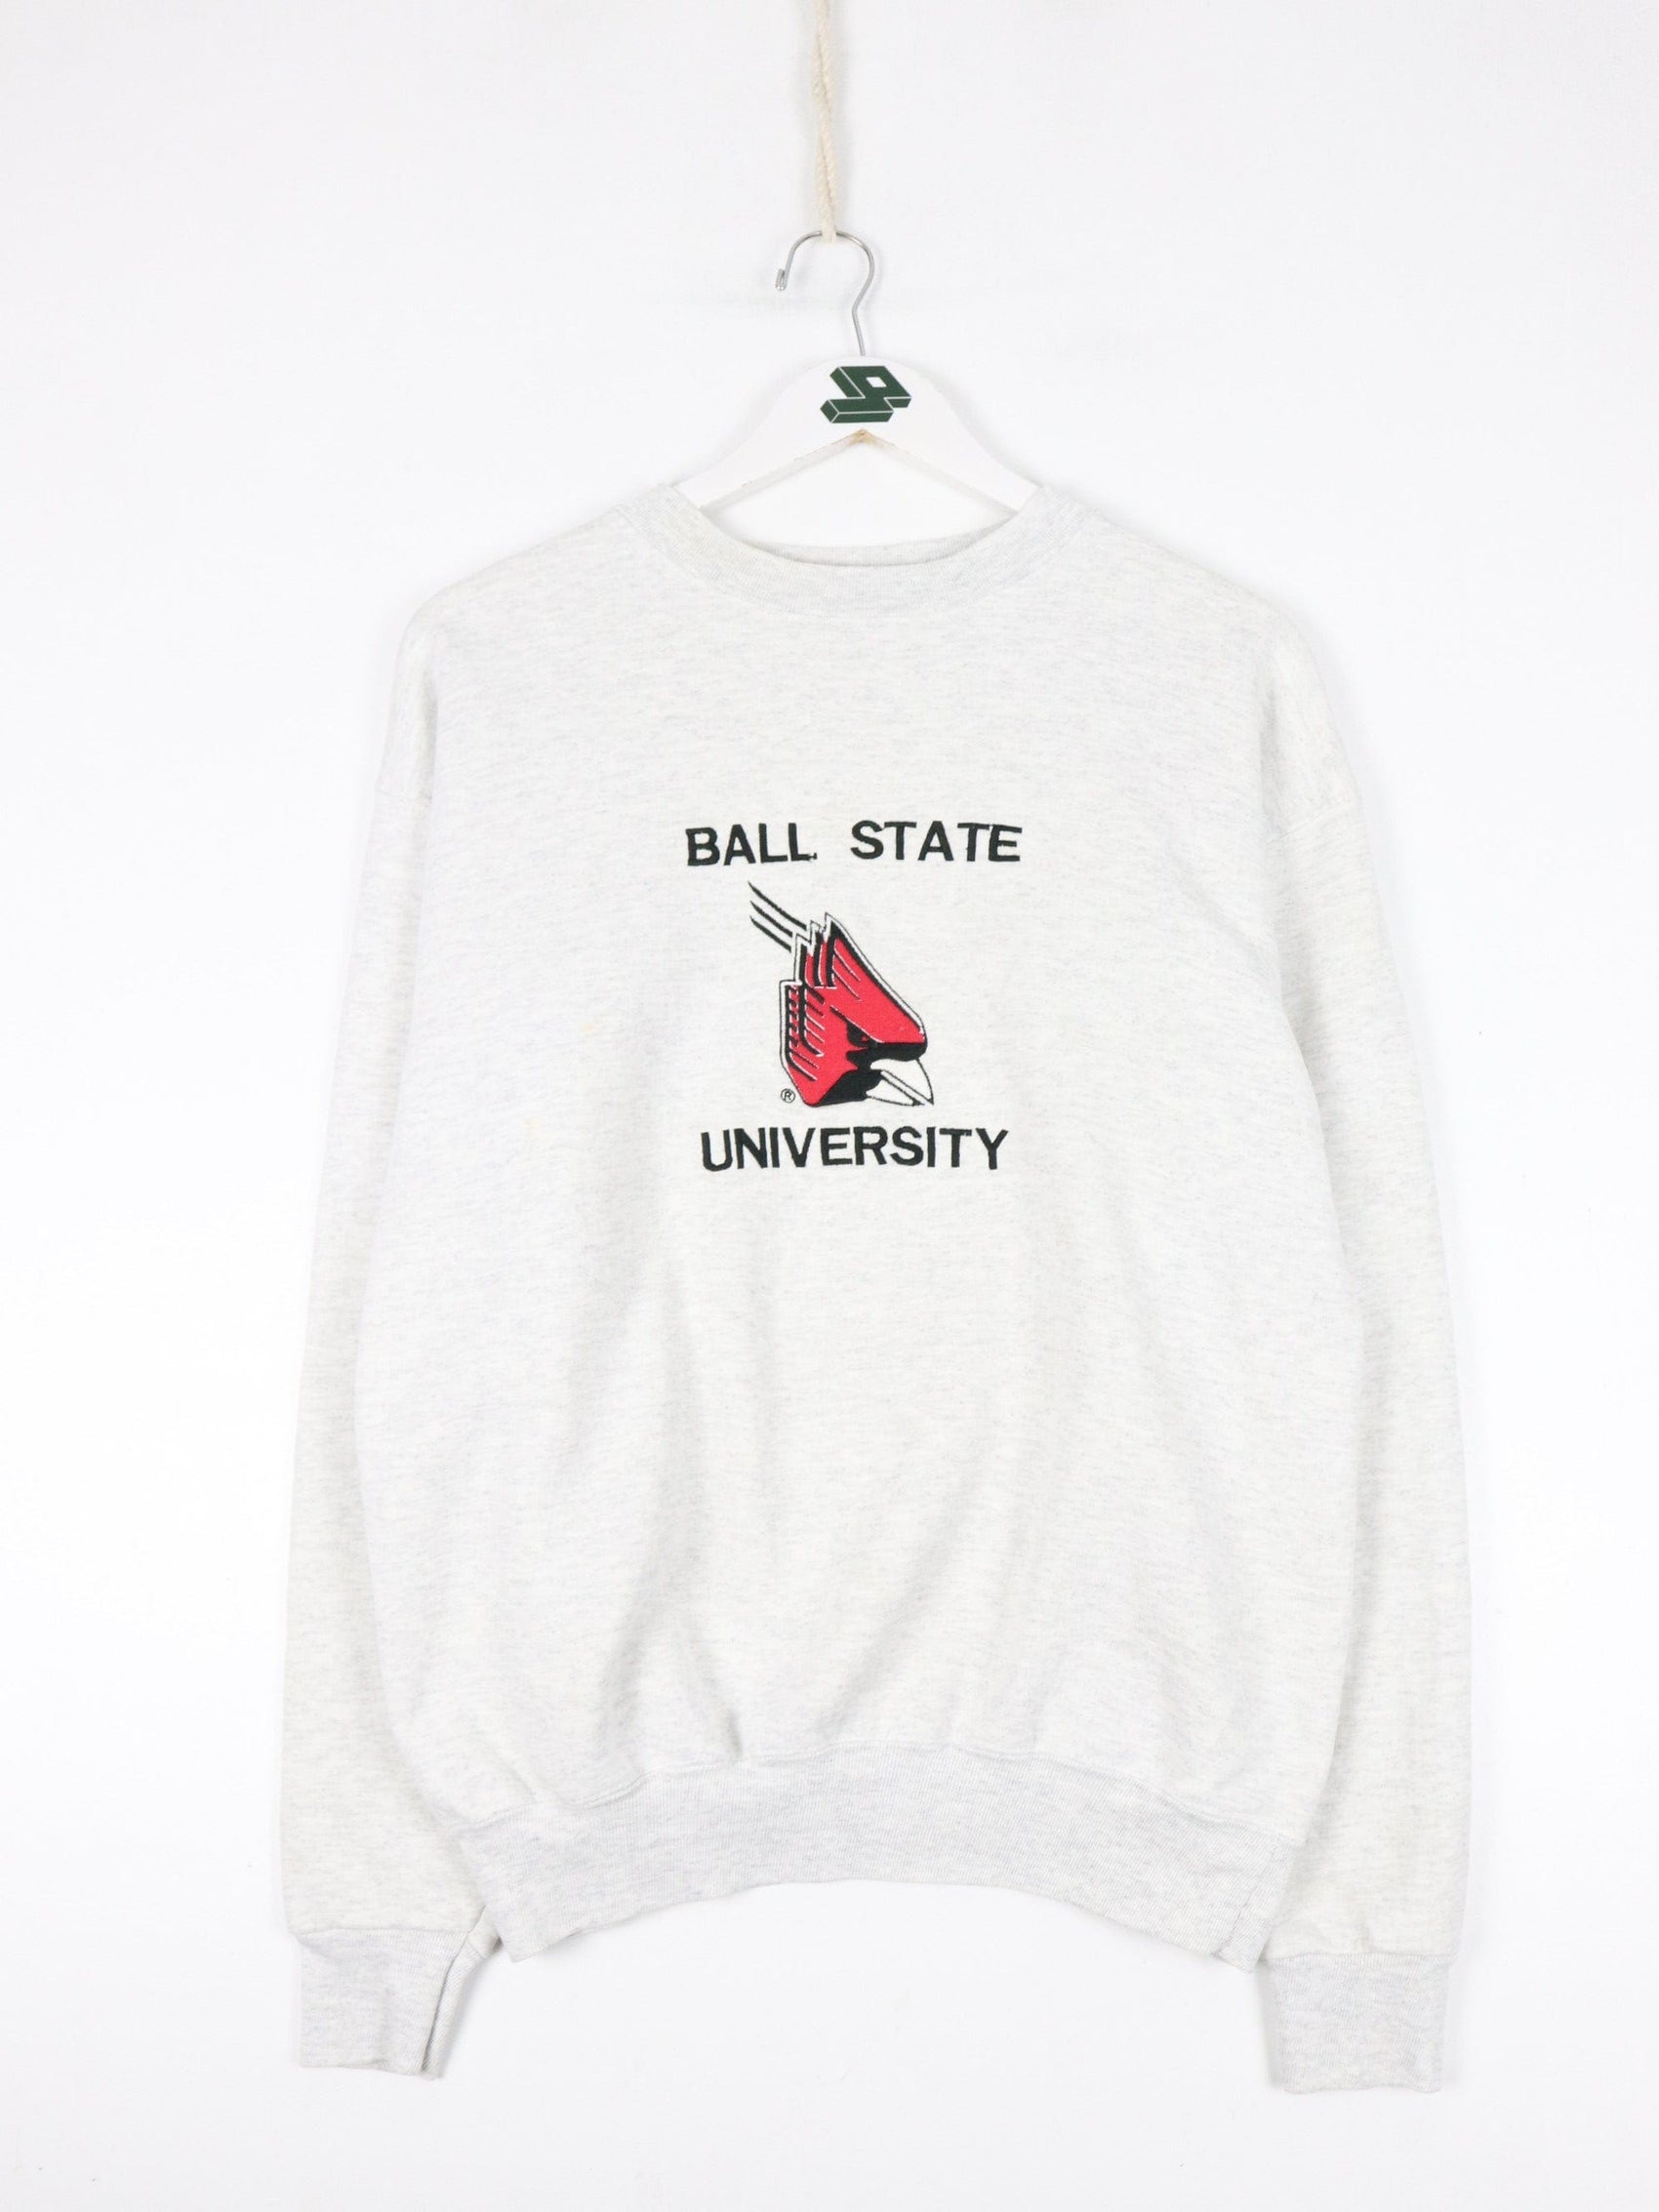 Collegiate Sweatshirts & Hoodies Vintage Ball State University Sweatshirt Fits Mens Medium Grey College